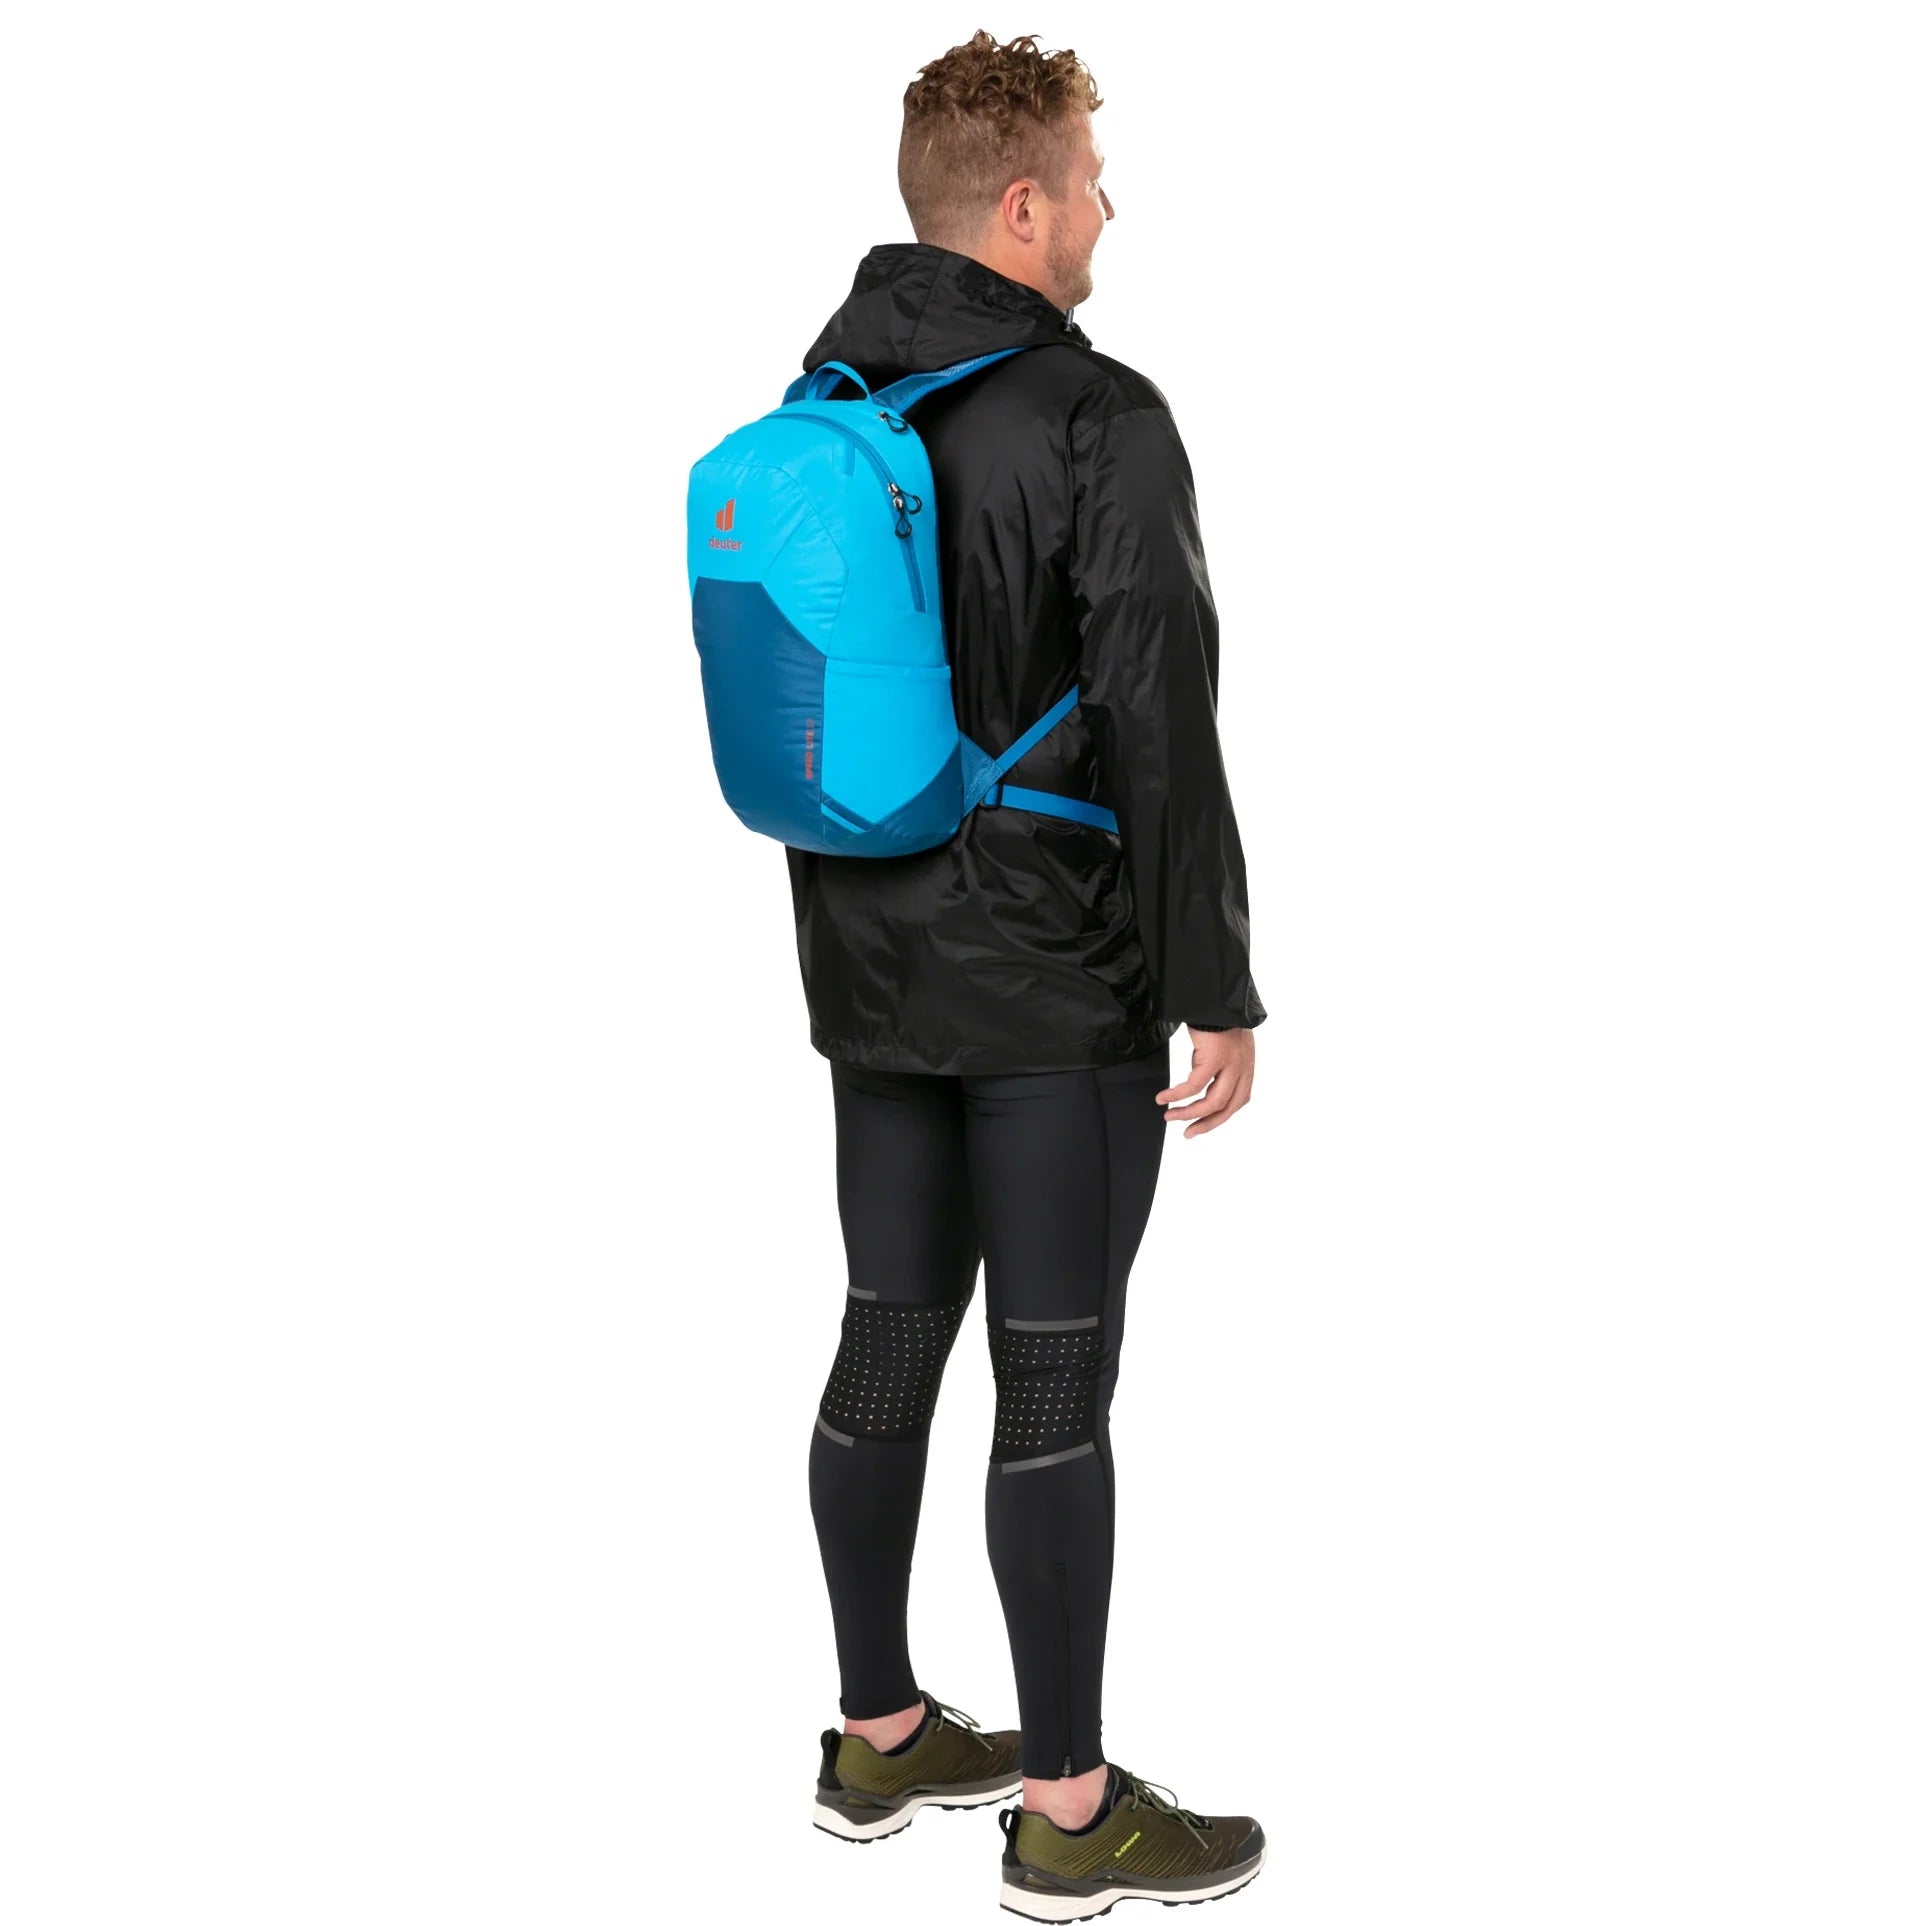 Deuter Travel Speed Lite 17 hiking backpack 45 cm - Shale-Graphite